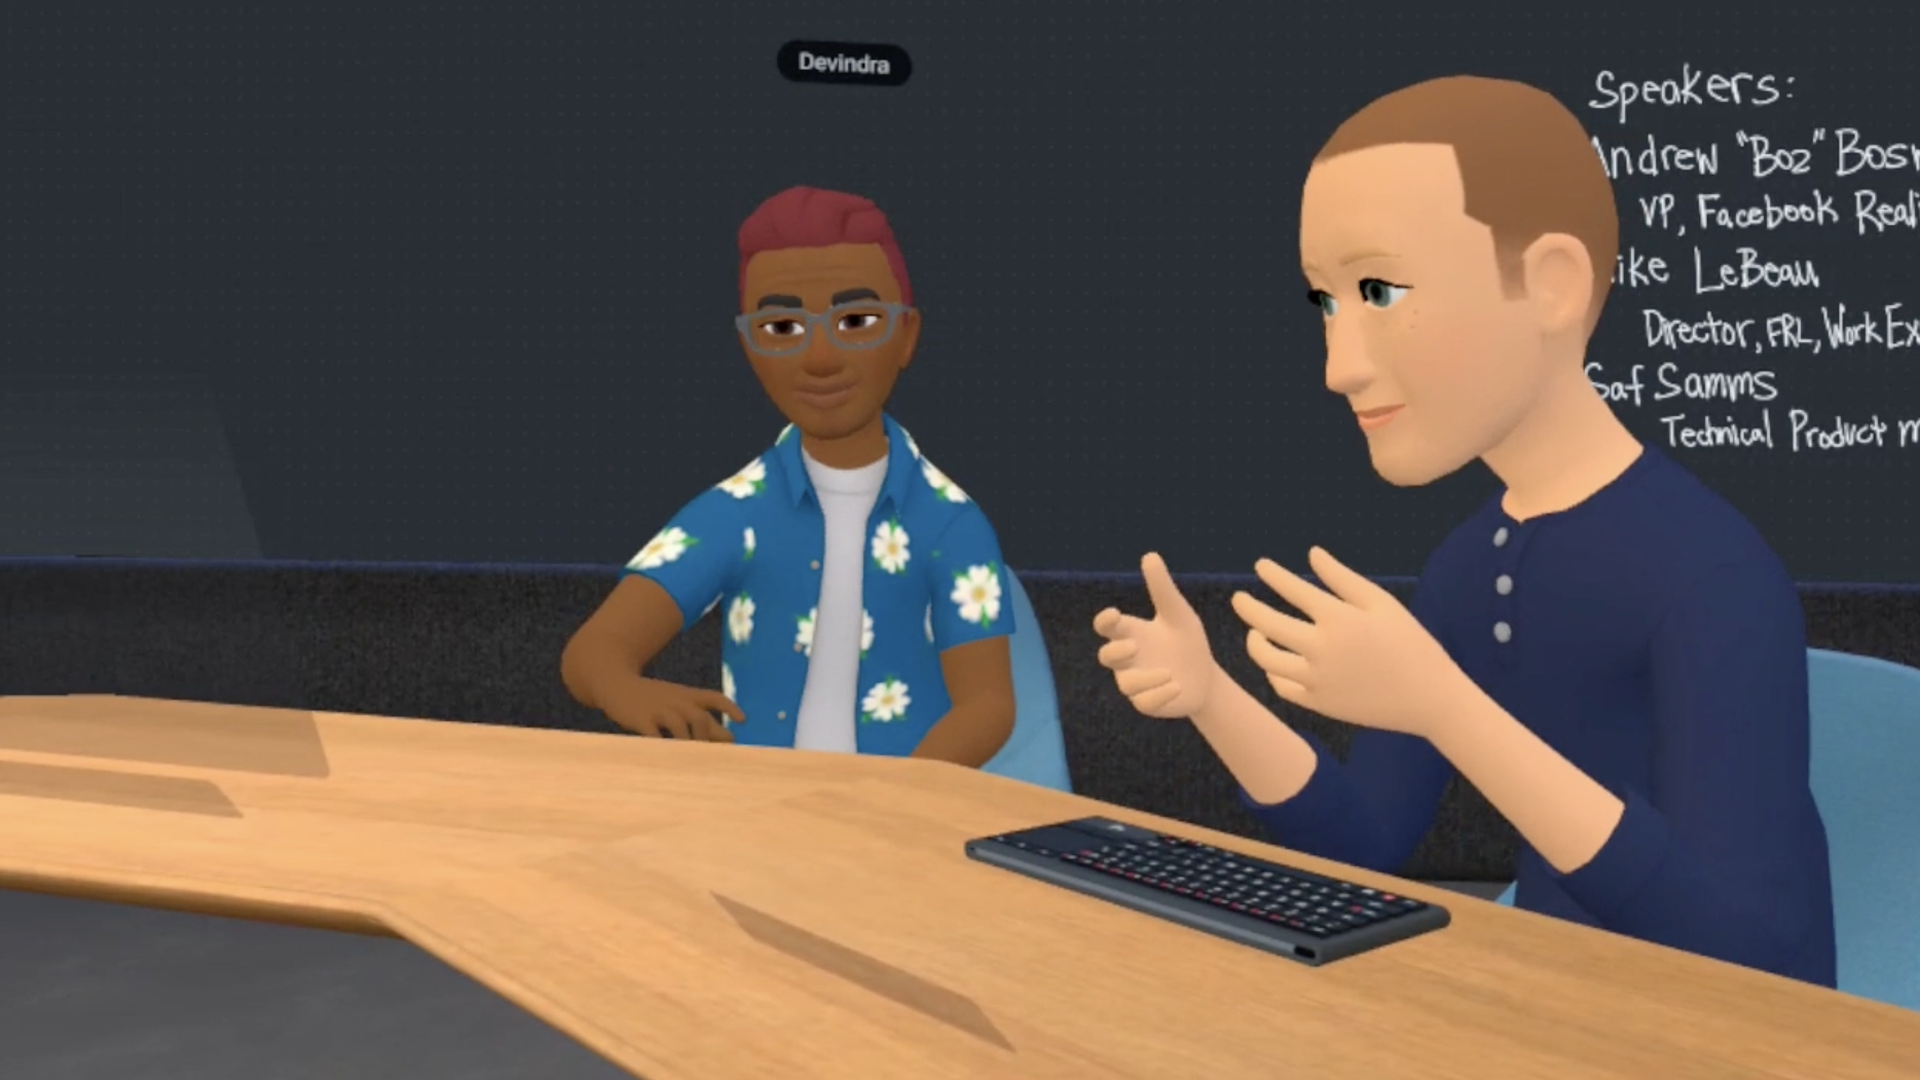 Mark Zuckerberg, speaking to reporters in a VR meeting using Facebook's Horizon Workrooms software.